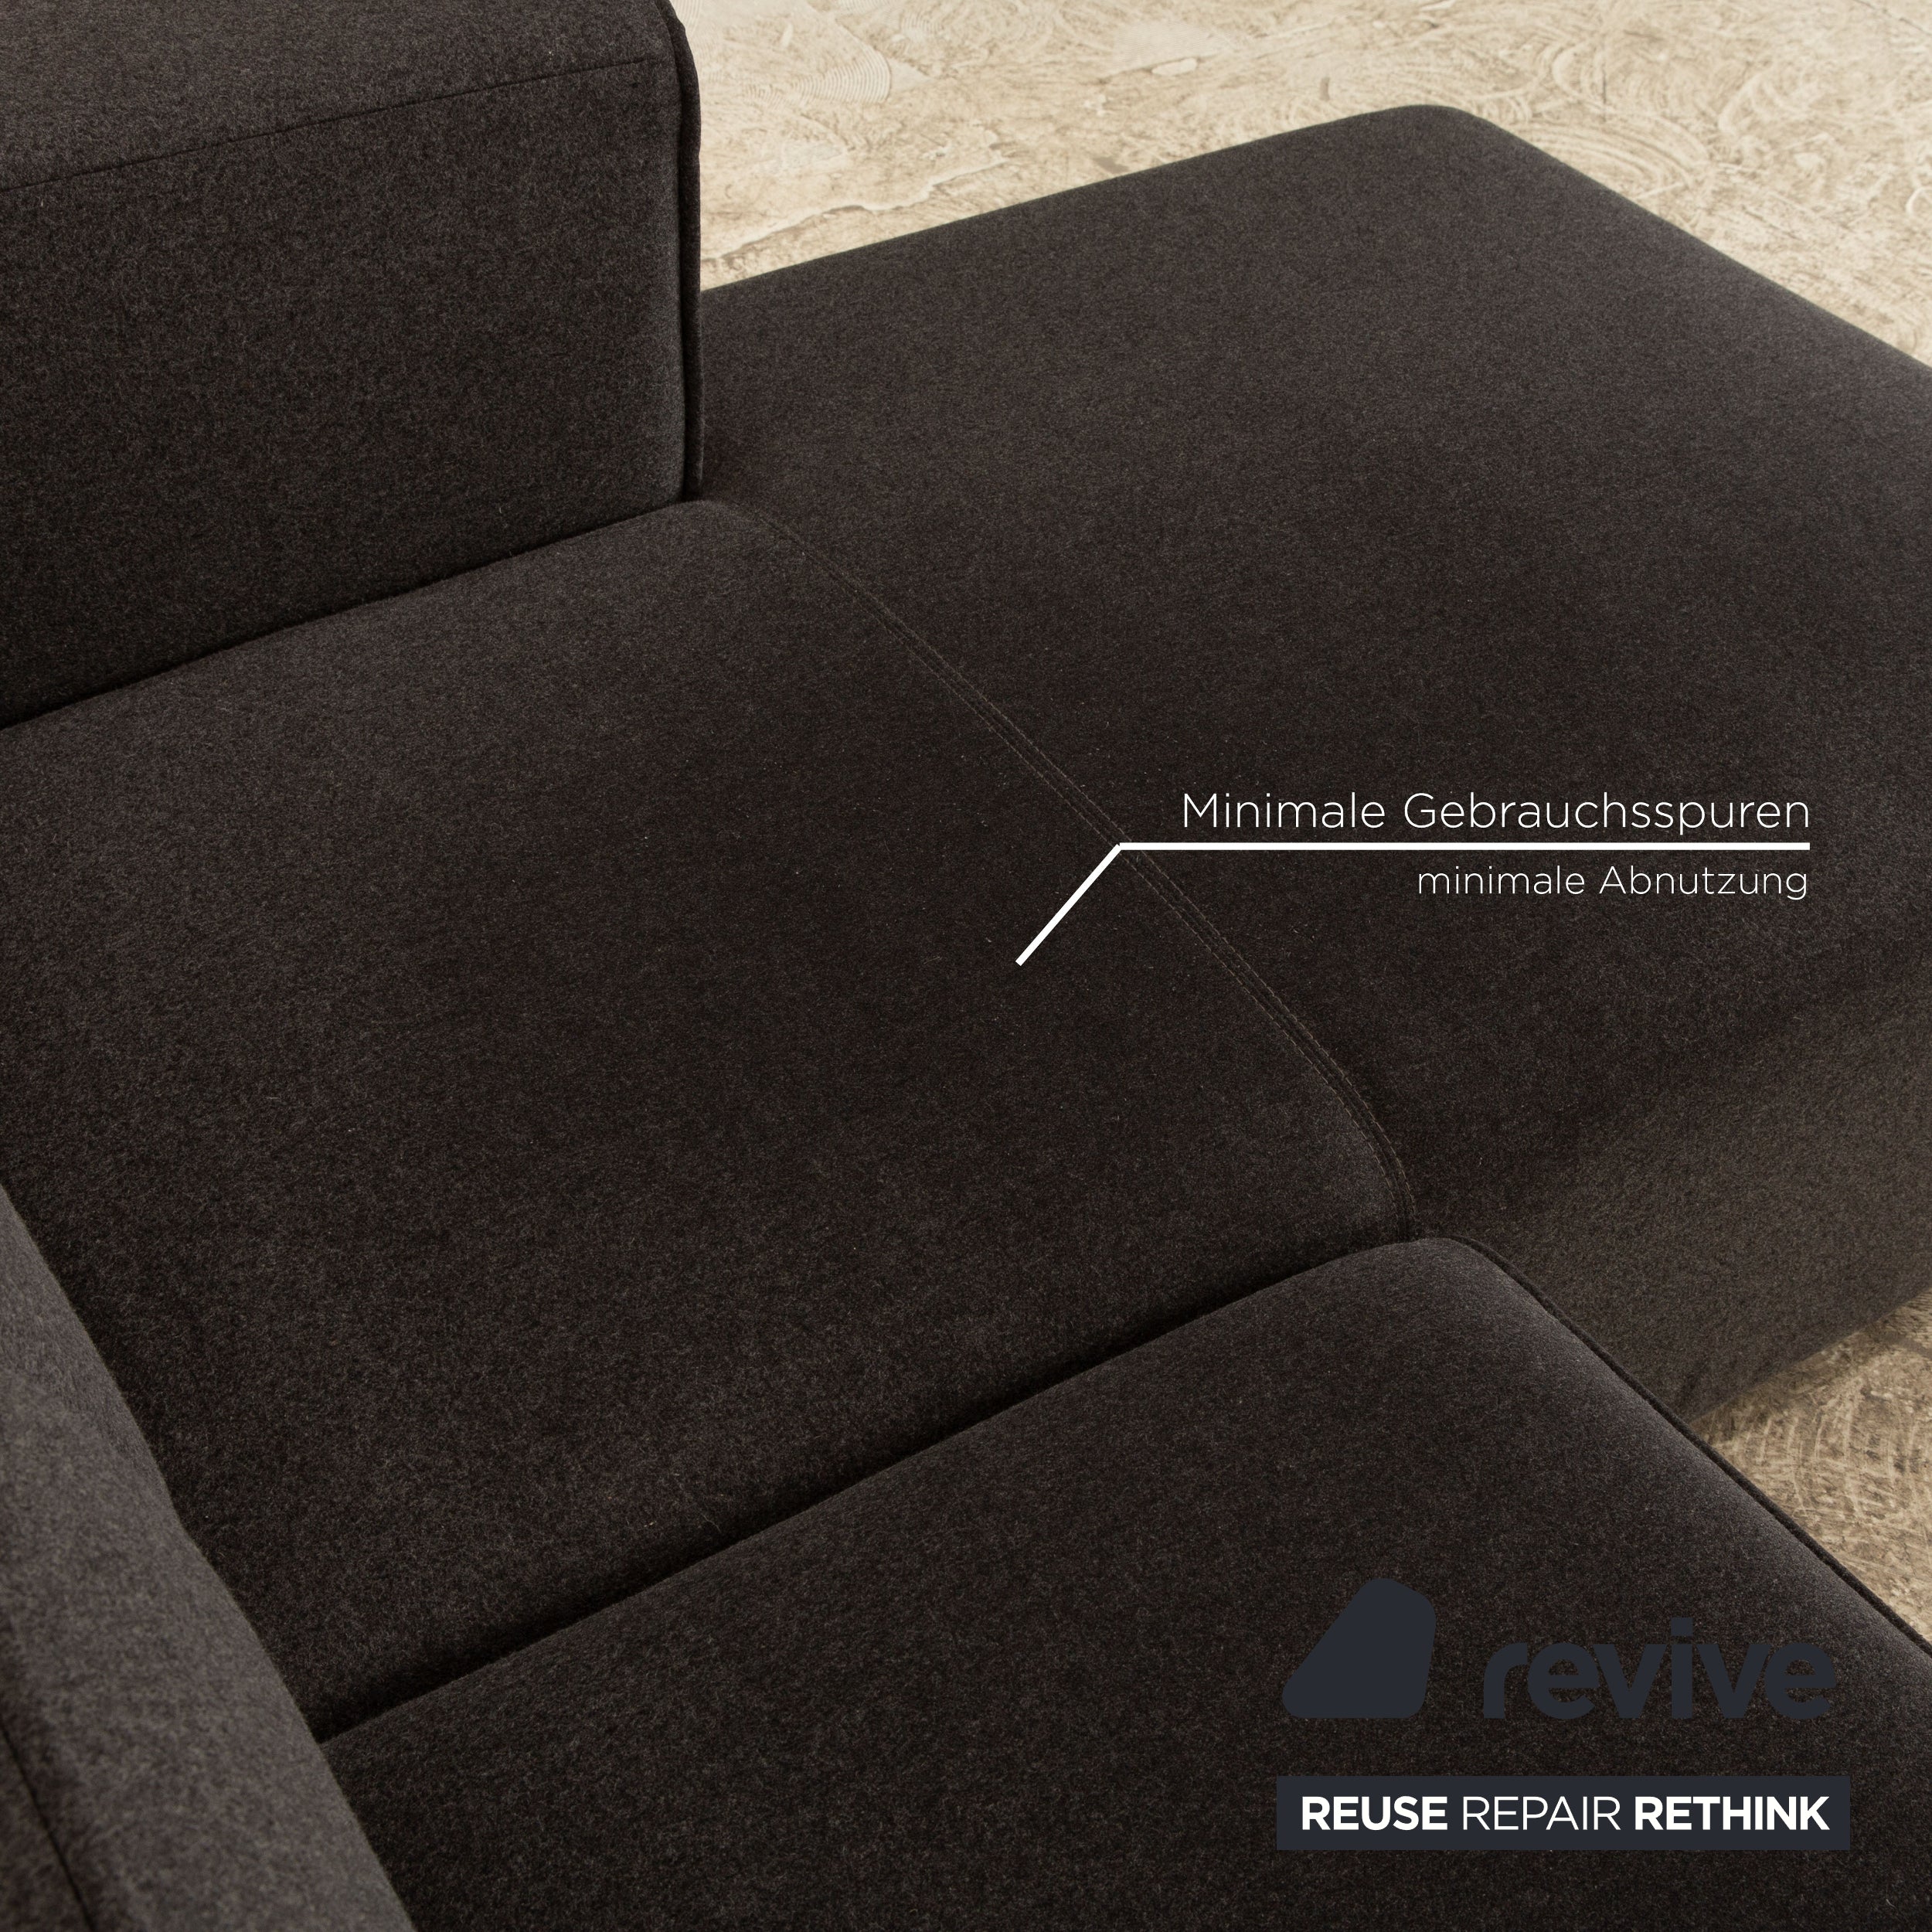 BoConcept Carmo fabric corner sofa anthracite chaise longue right & left sofa couch